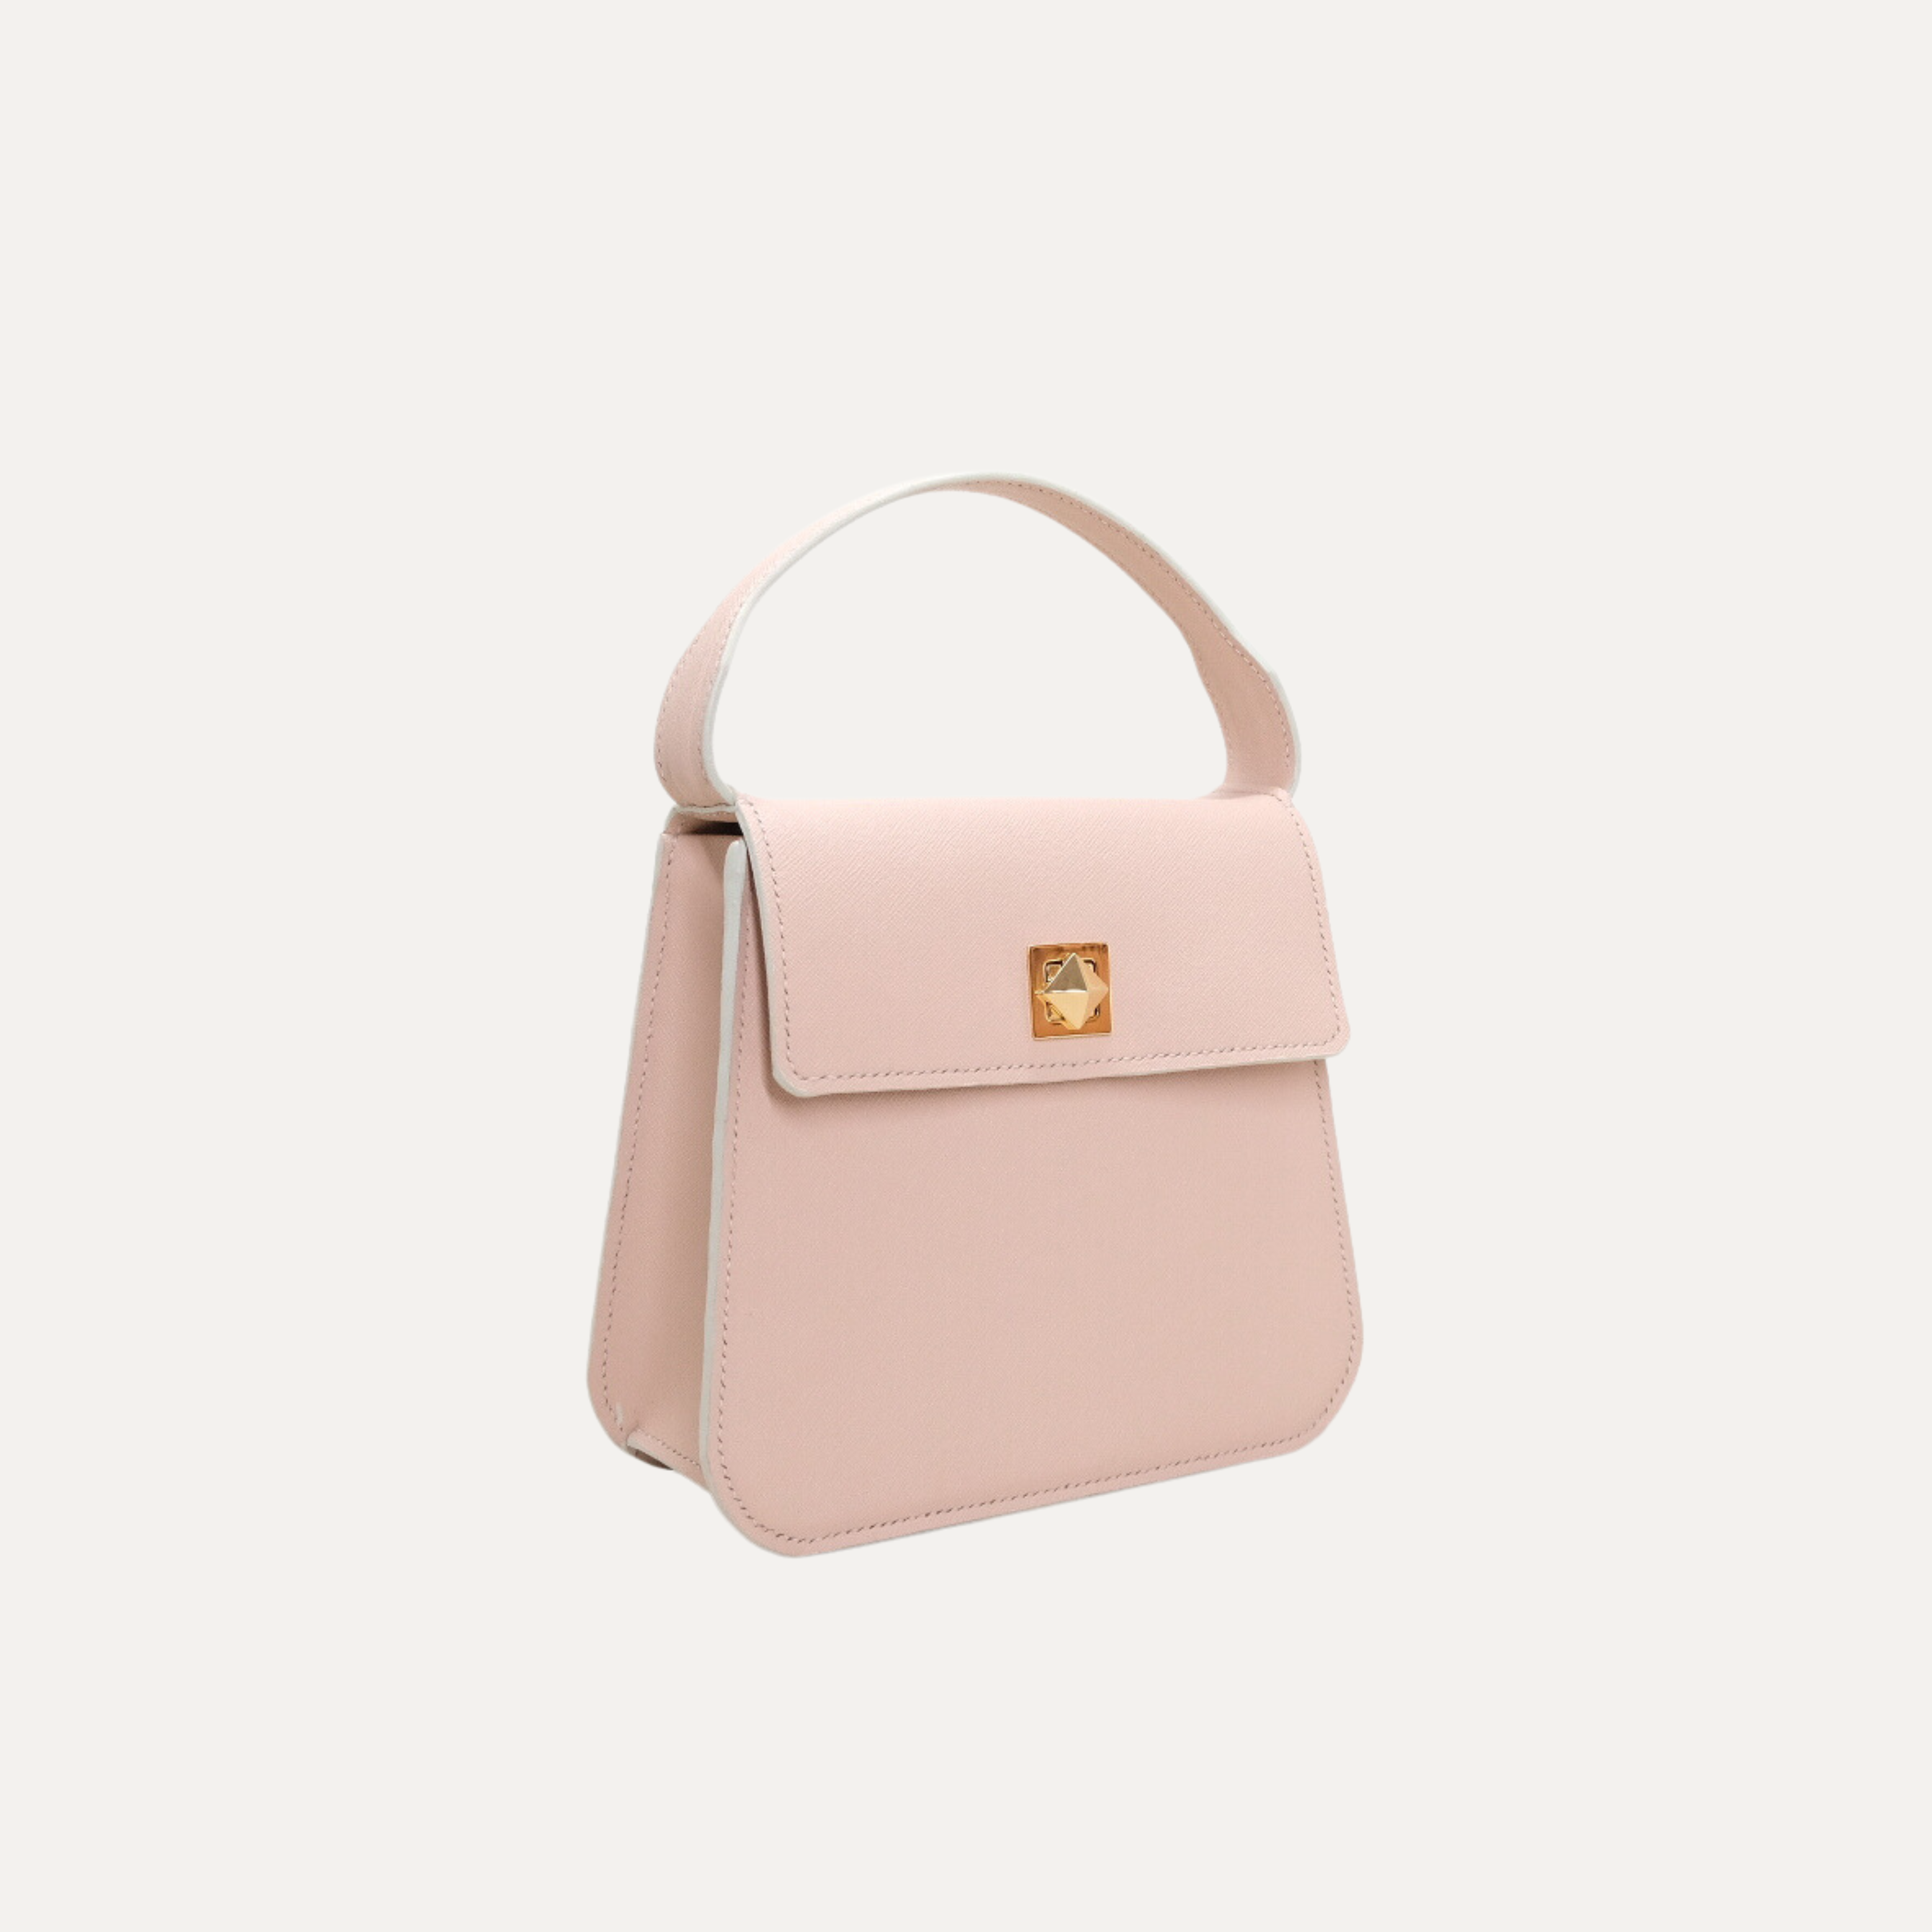 Blush pink genuine leather top-handle handbag made in Australia